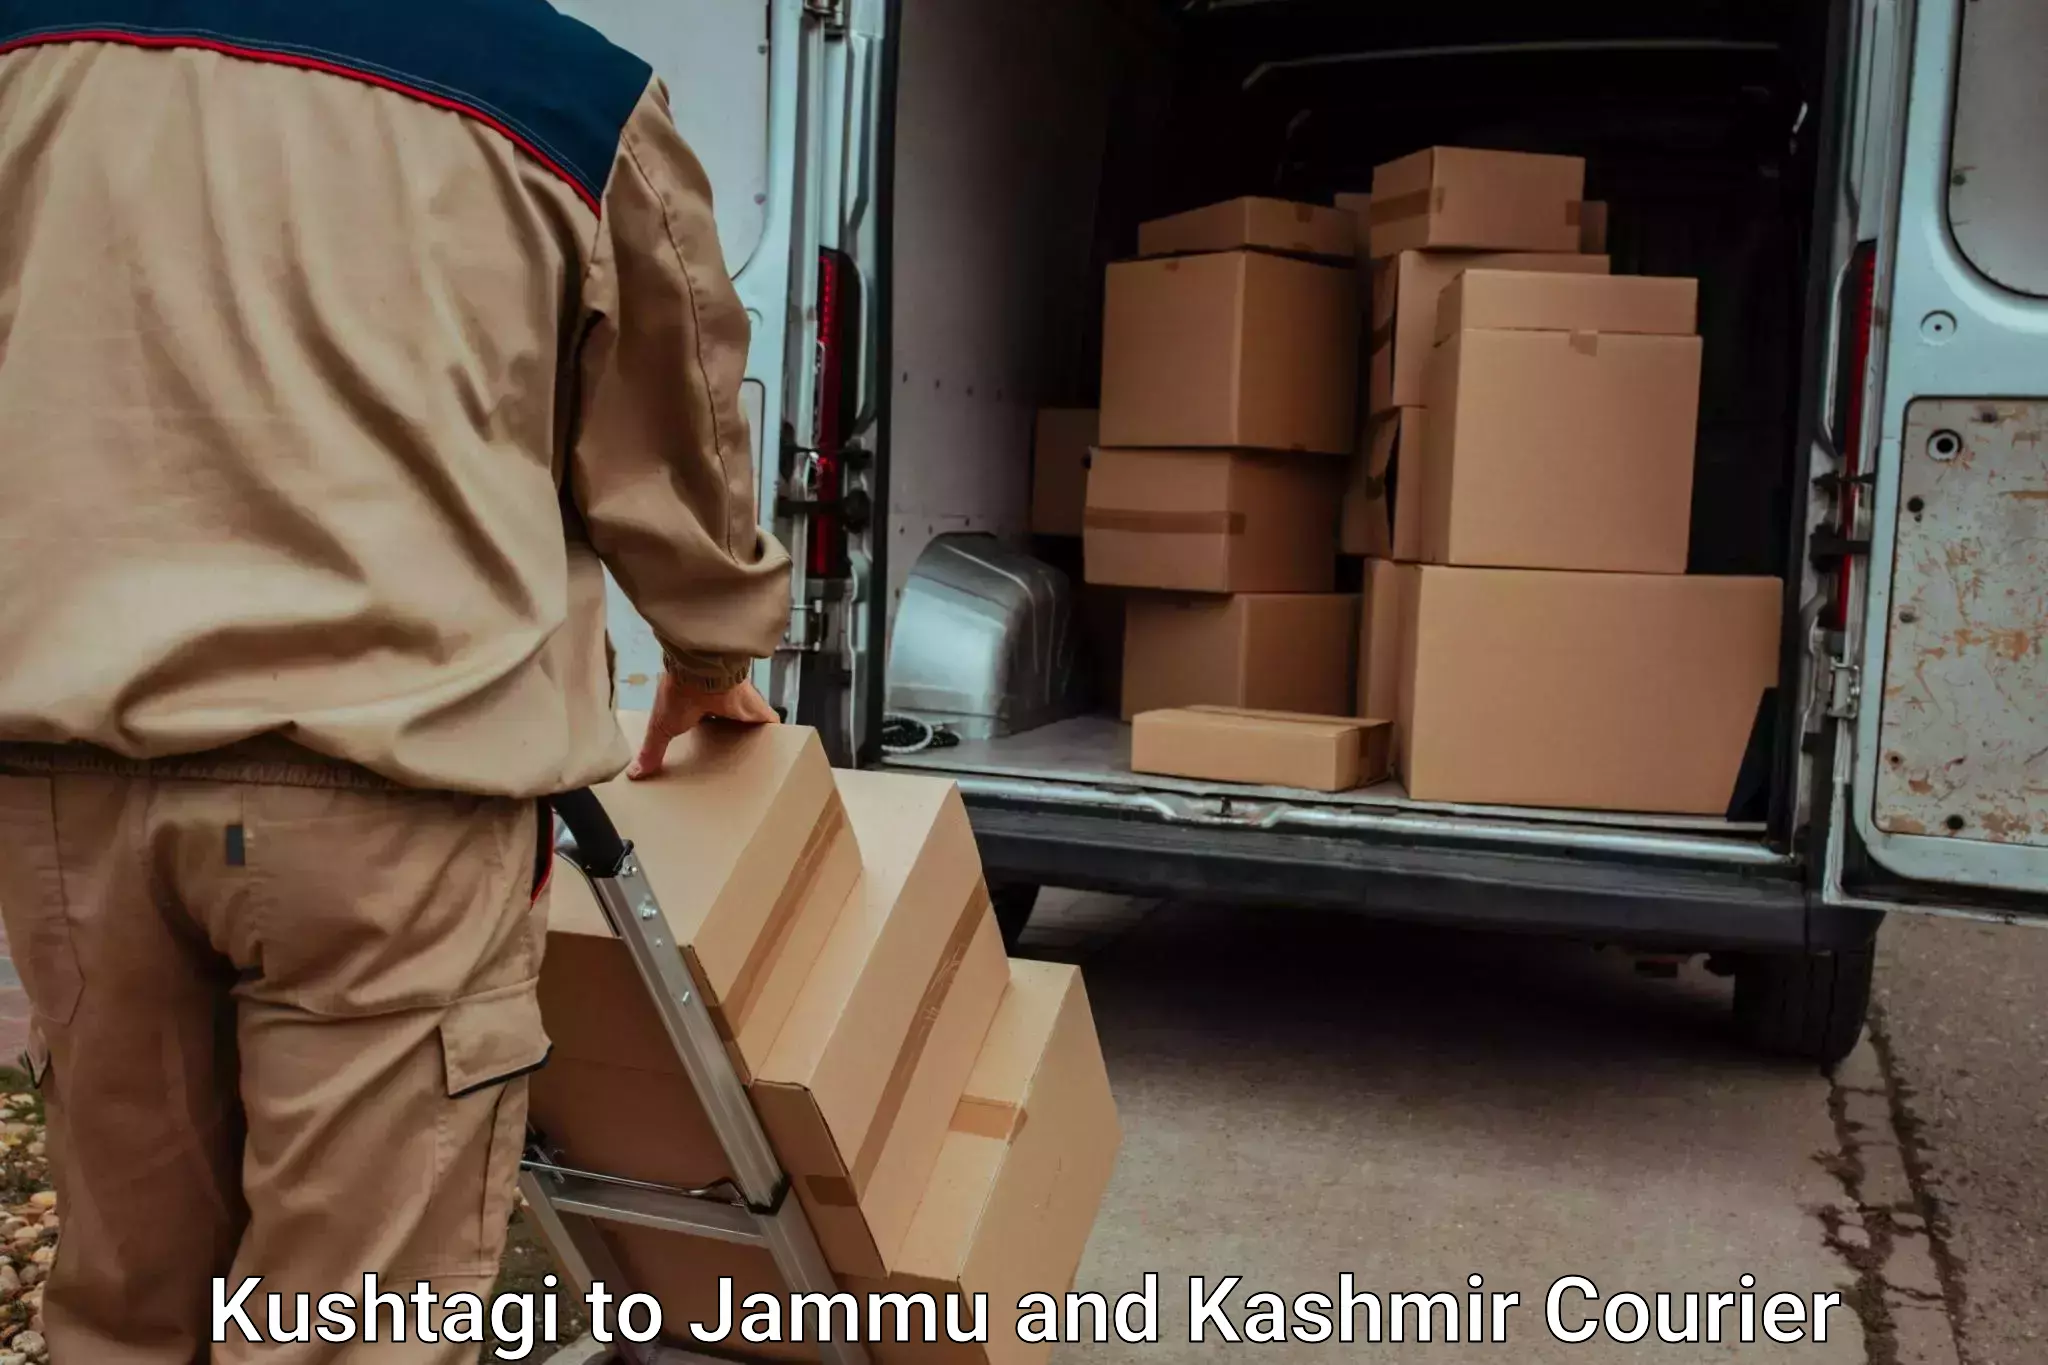 Door-to-door baggage service Kushtagi to Jammu and Kashmir